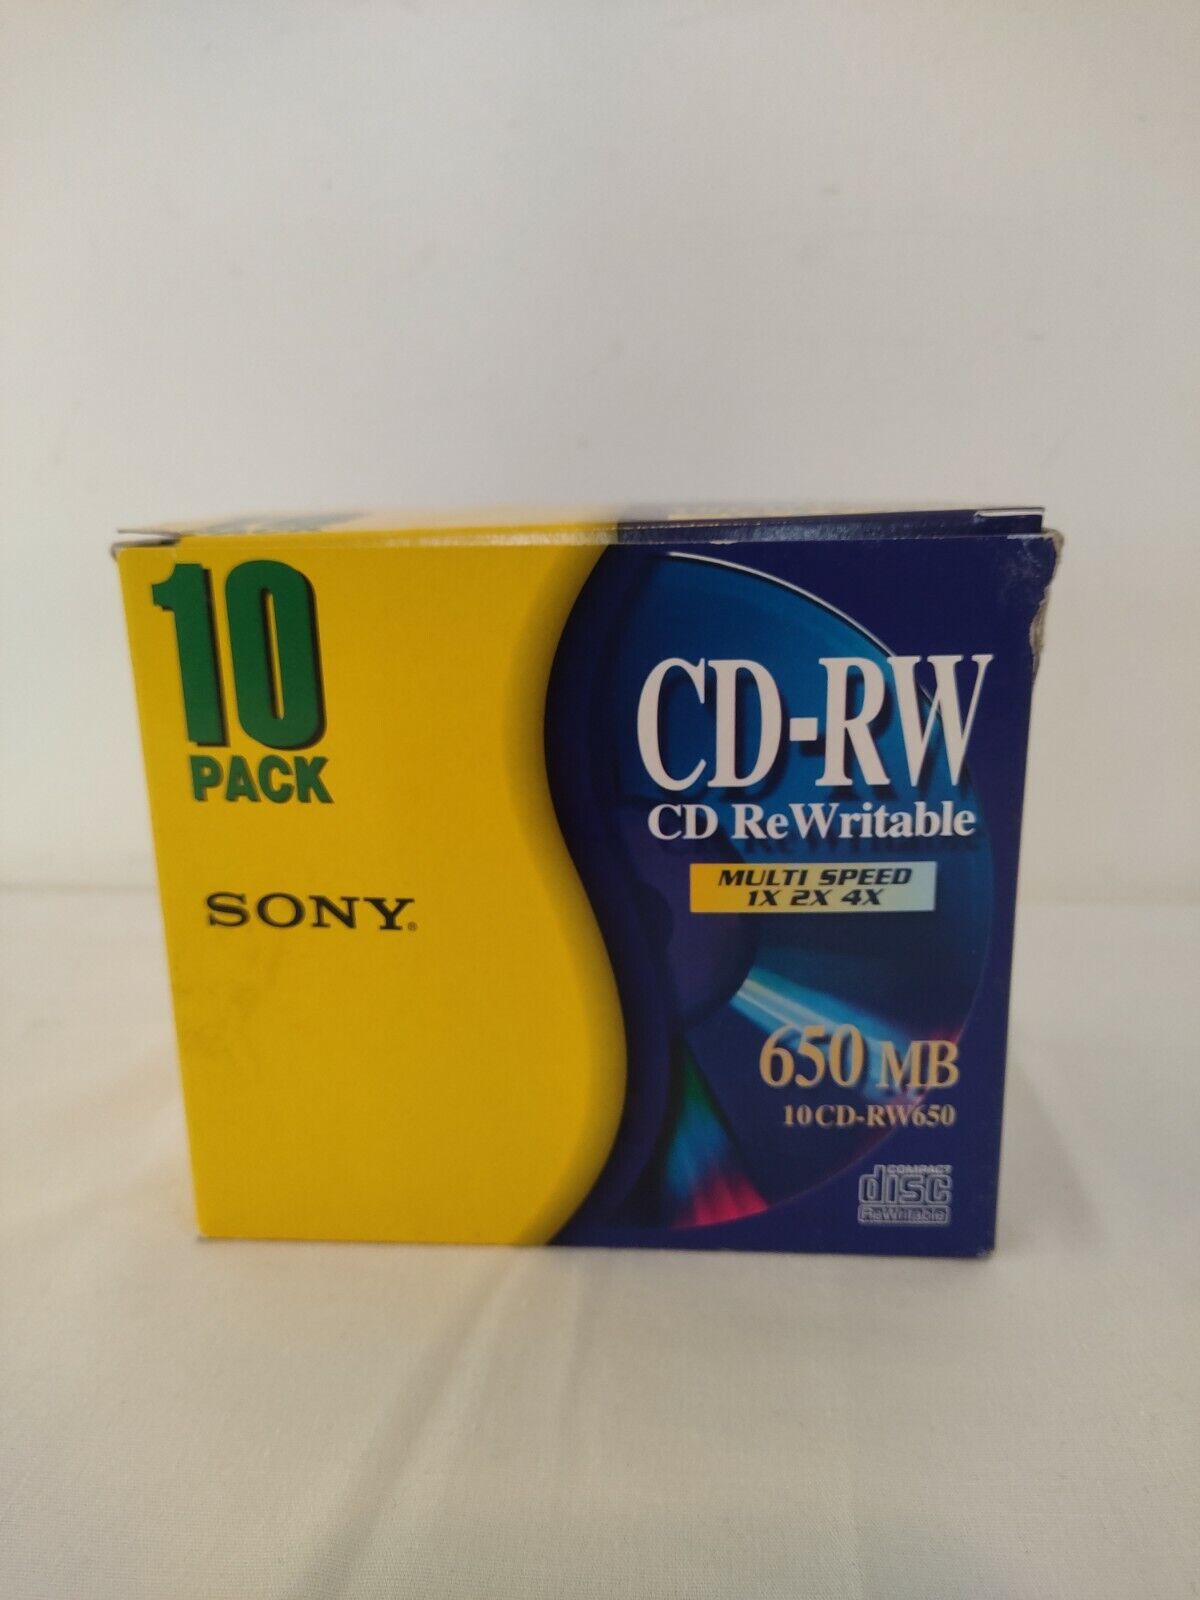 New 10 Pack Sony Cd-rw650 Rewritable Cds 650 Mb Multi Speed 1x 2x 4x